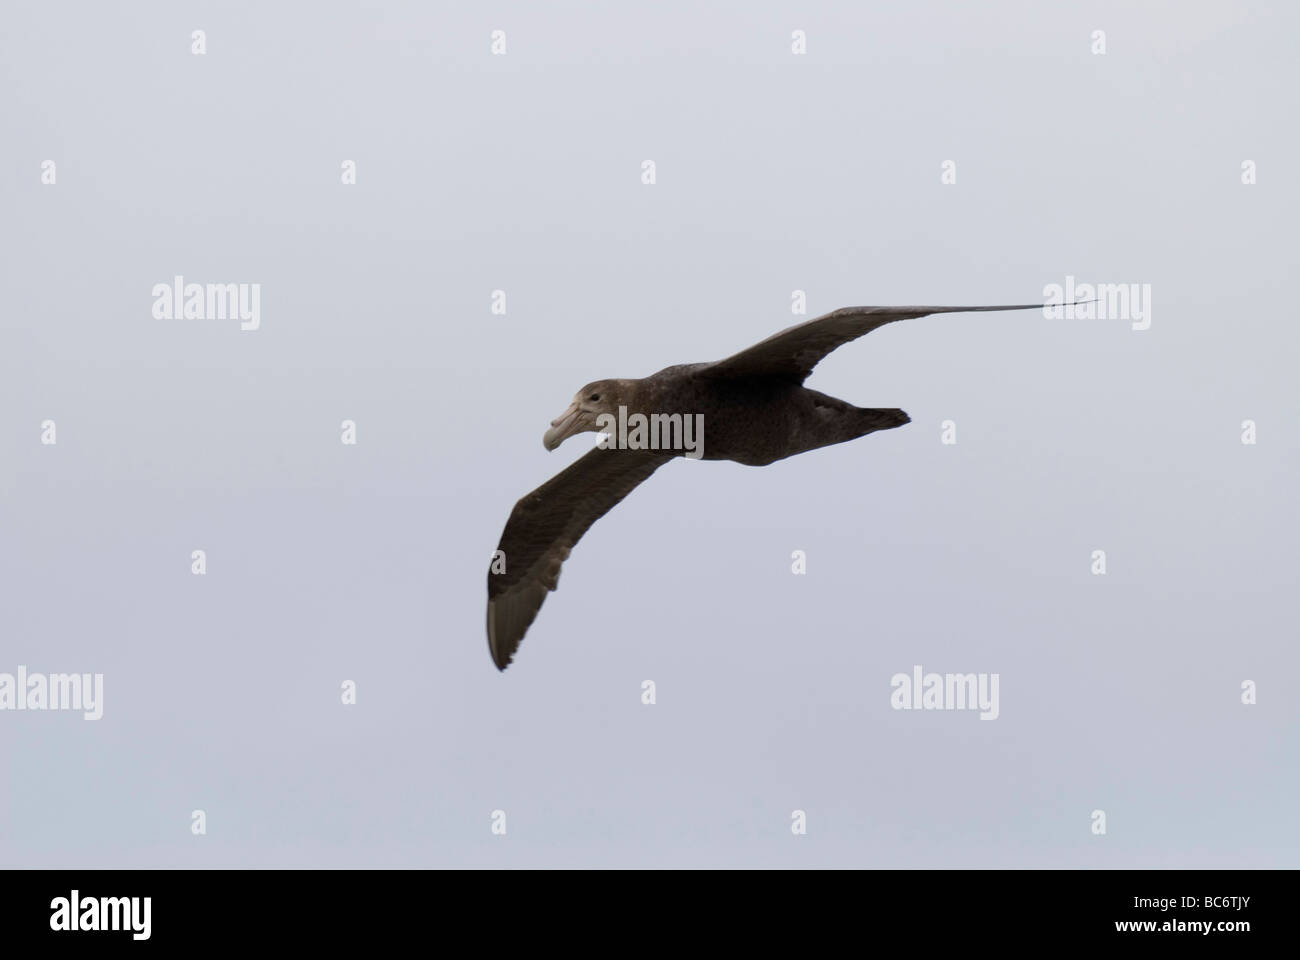 Southern Giant Petrel, Macronectes giganteus,flying Stock Photo